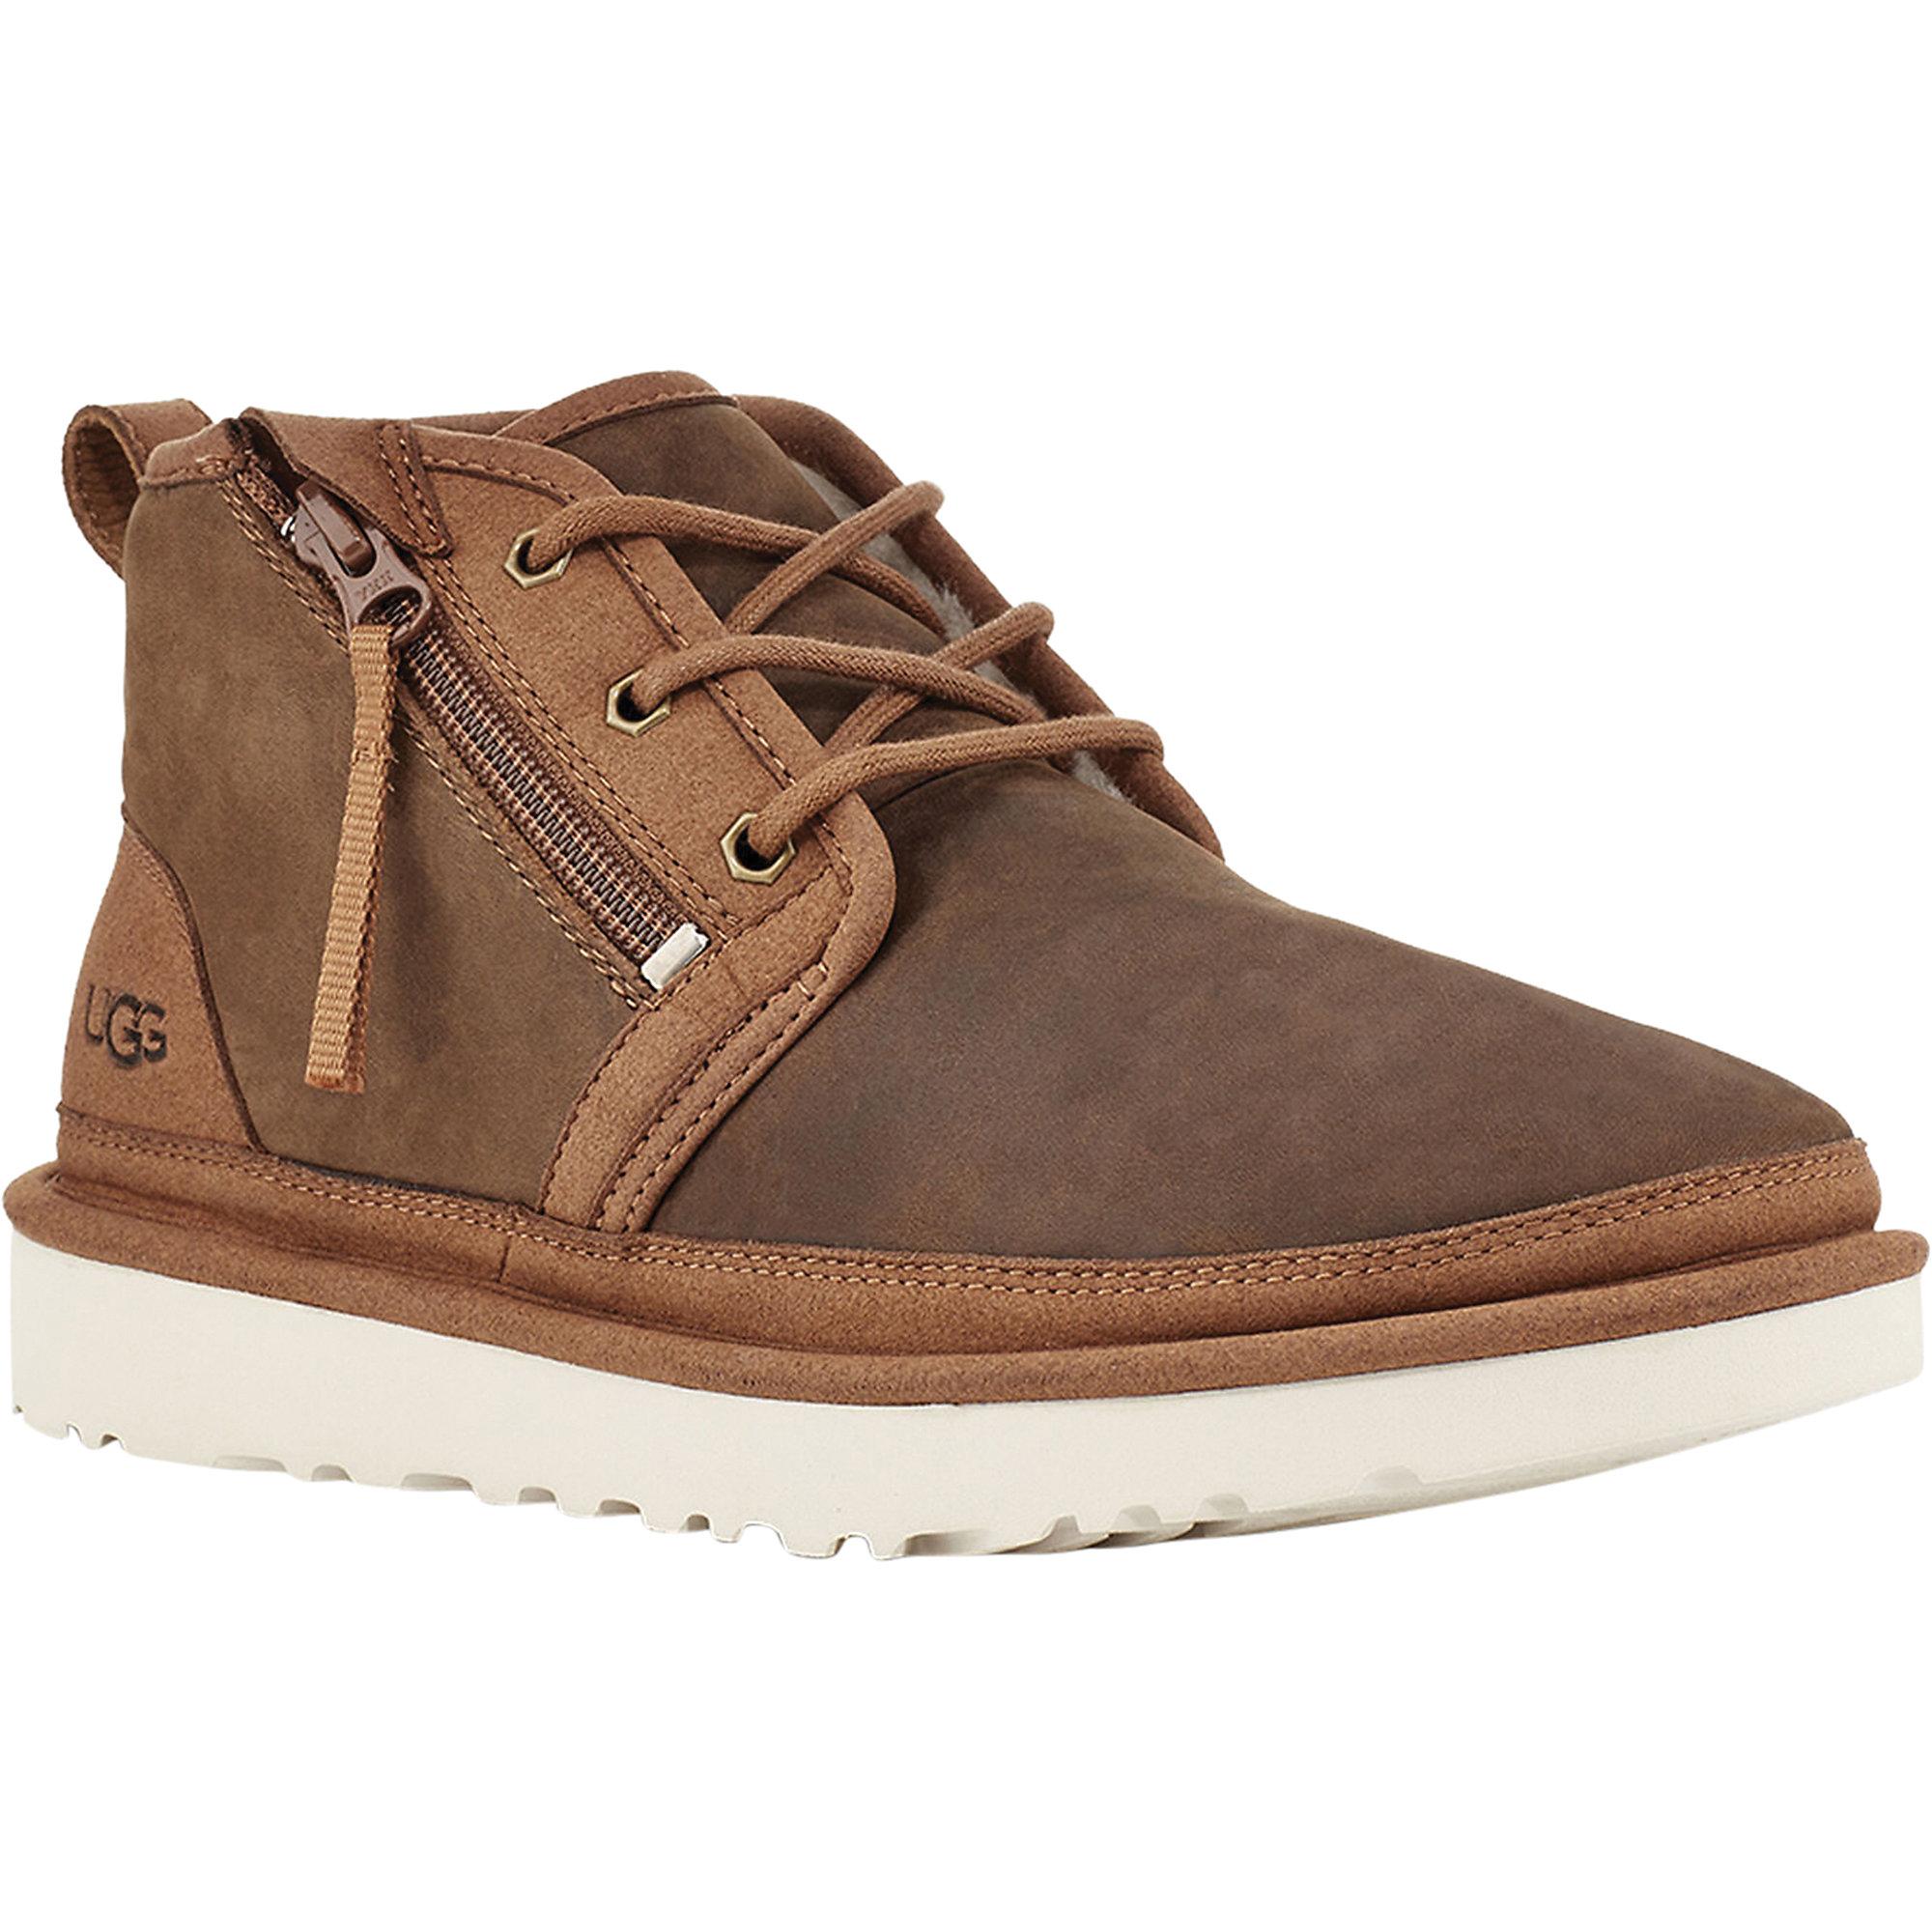 UGG Leather Neumel Zip Boot in Chestnut (Brown) for Men - Lyst